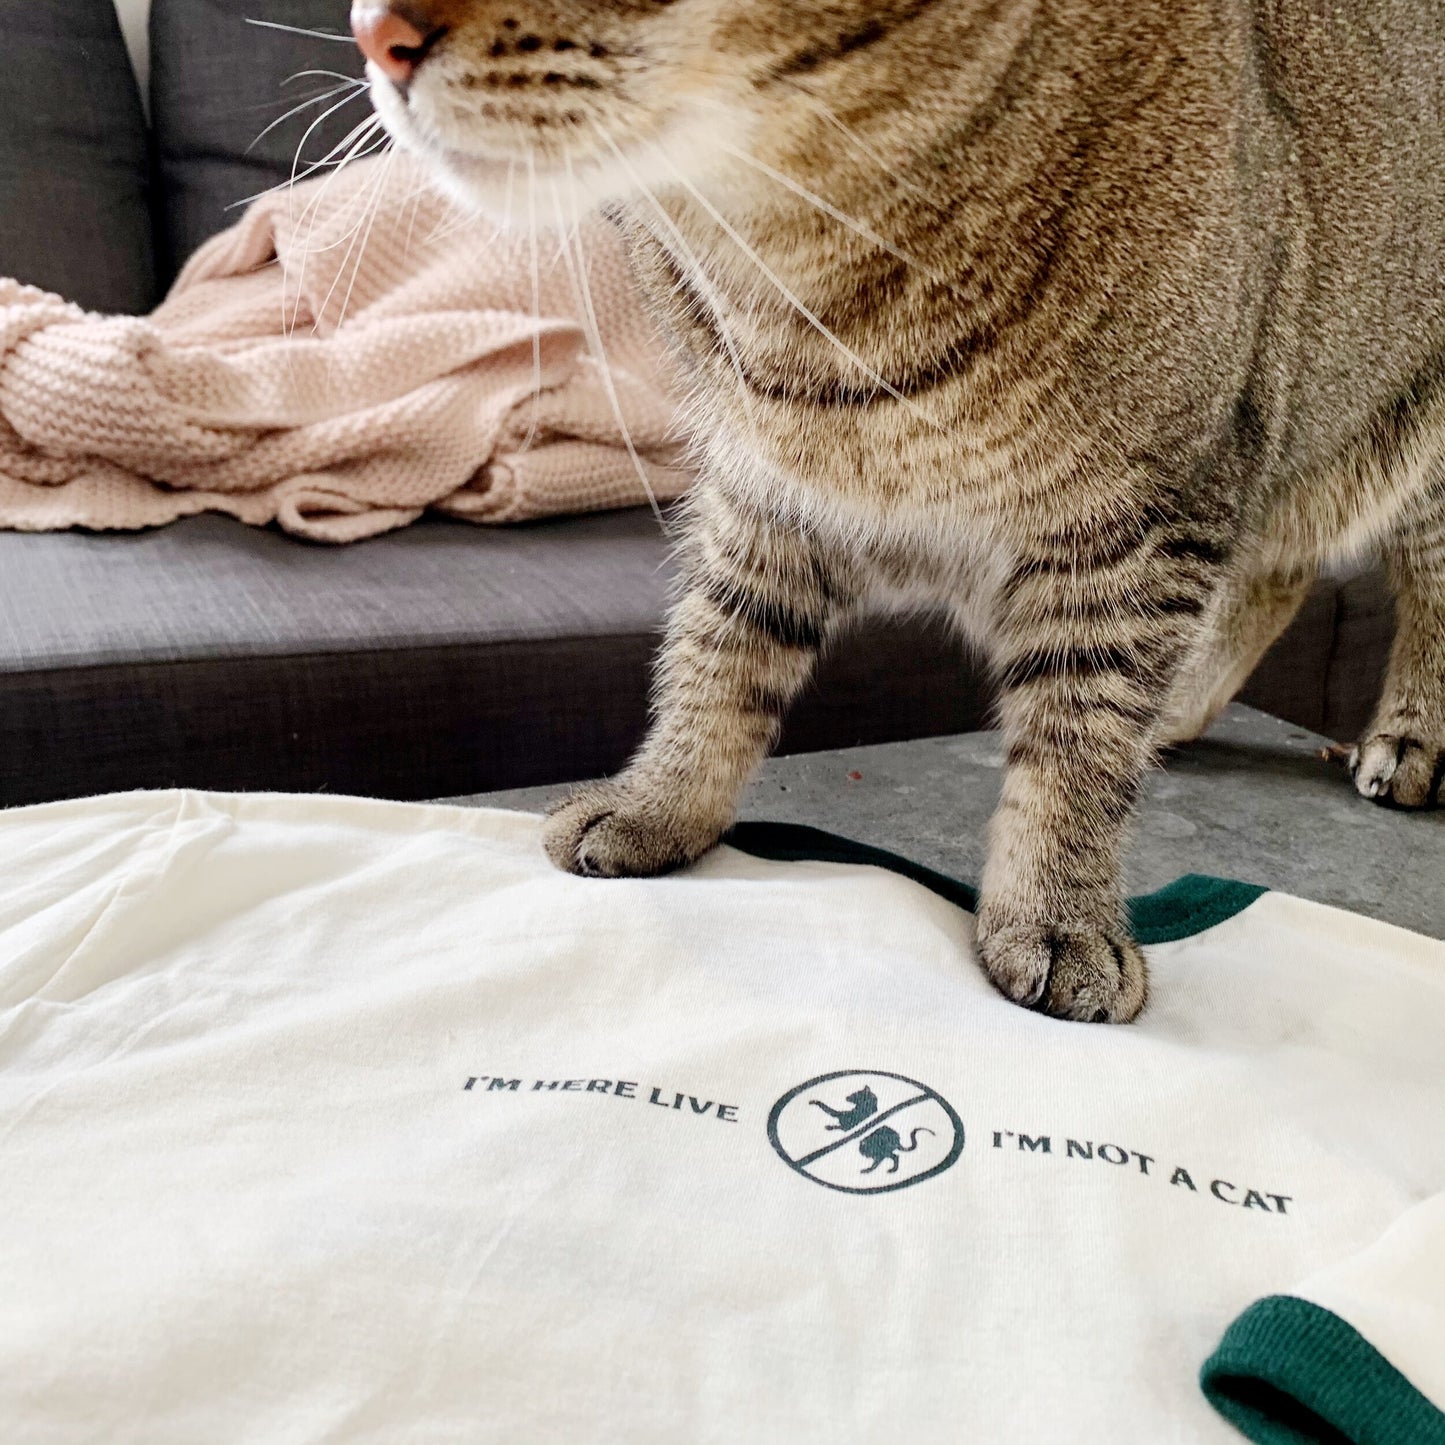 Zoom Cat "I'm Prepared to Go Forward" Shirt